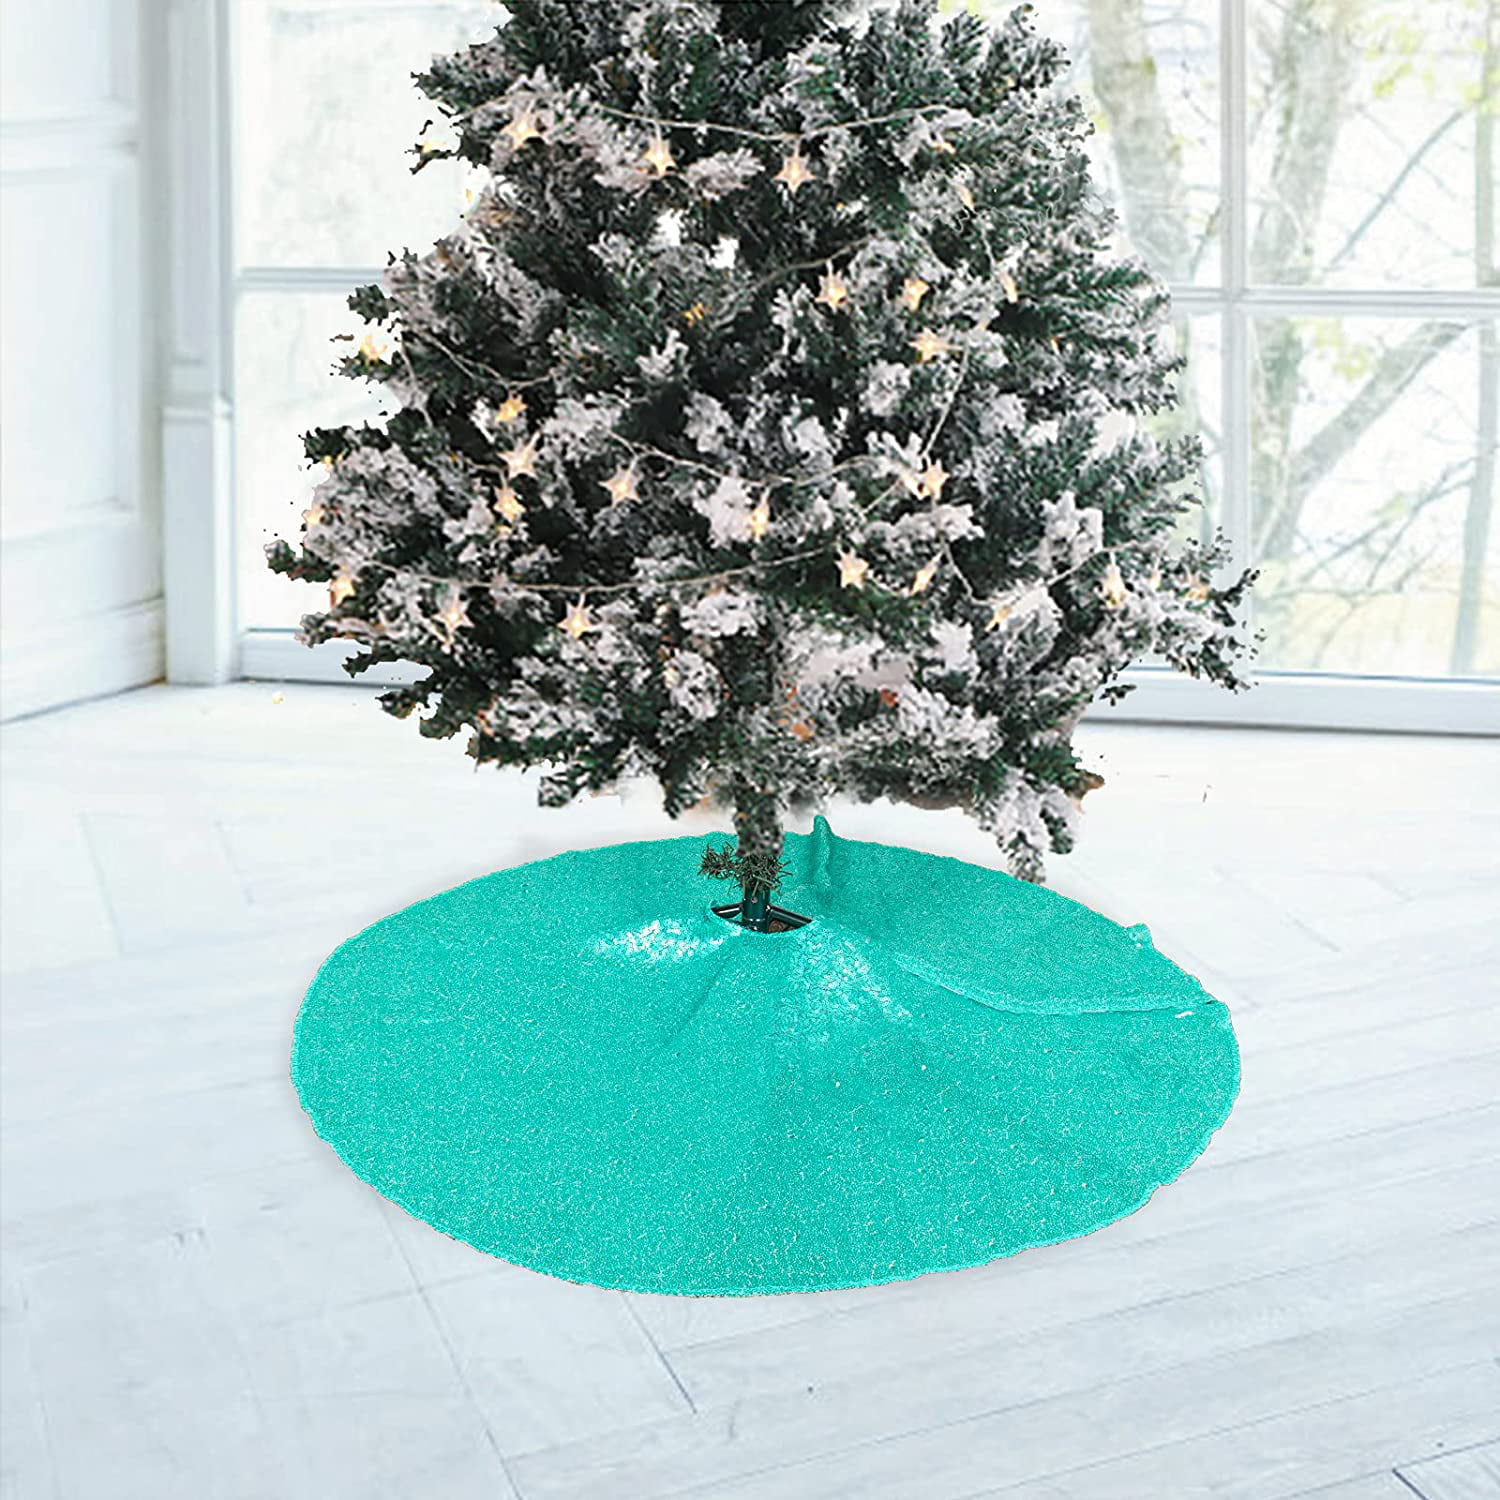 Details about   35'' Xmas Tree Skirt Mat Plush Mat Home Floor Christmas Decor Ornament Party US 